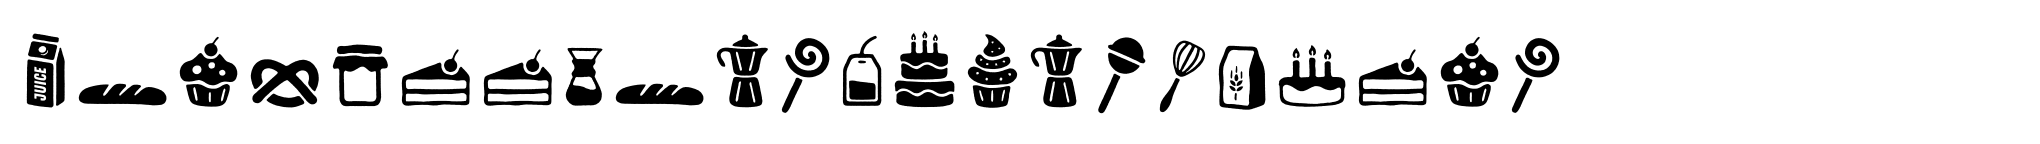 Zing Goodies Bakery Icons image